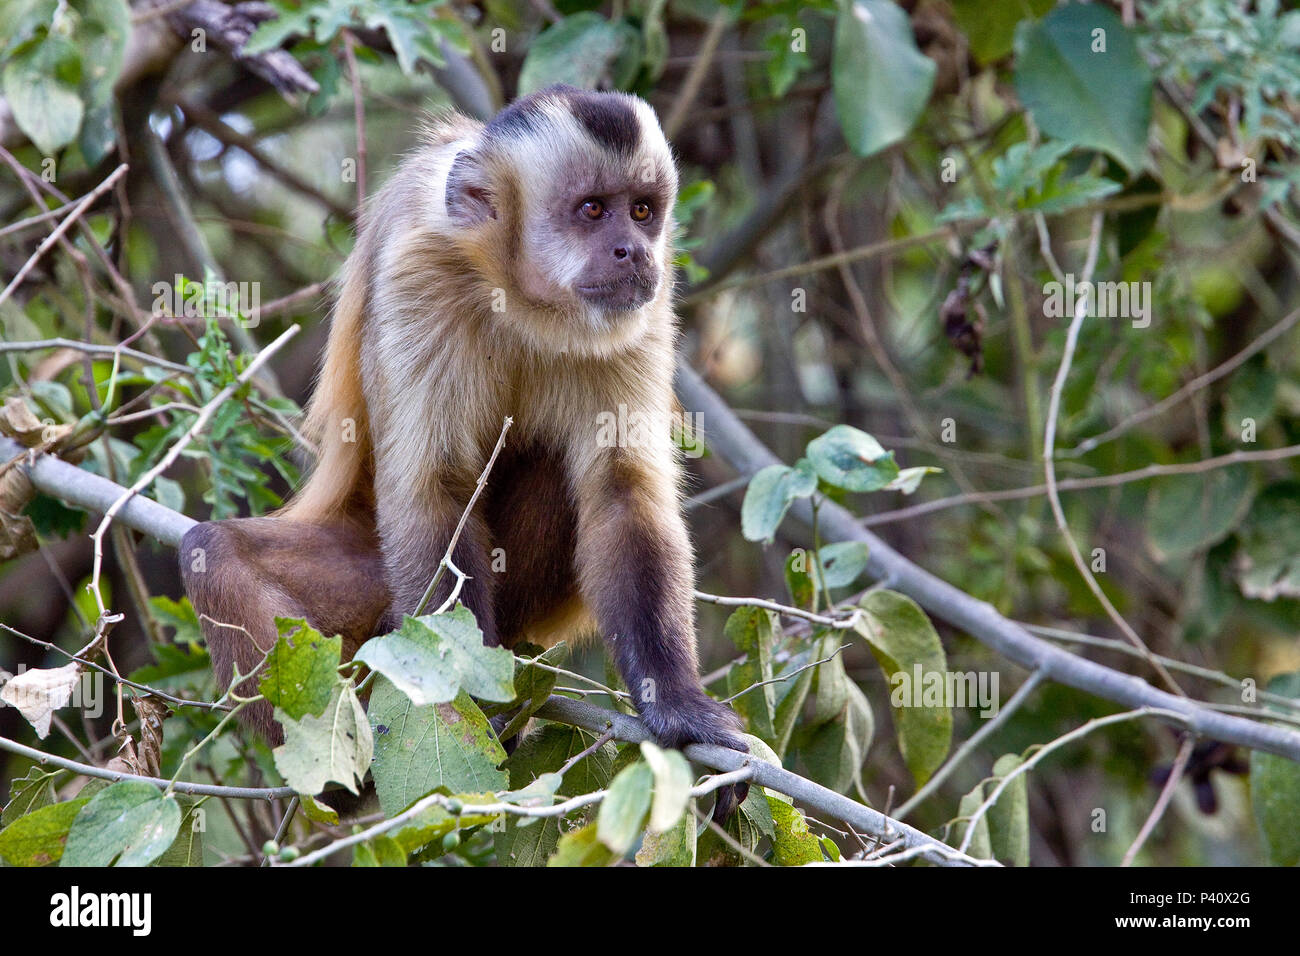 Macaco Prego Stock Photo by ©vbacarin 287923286